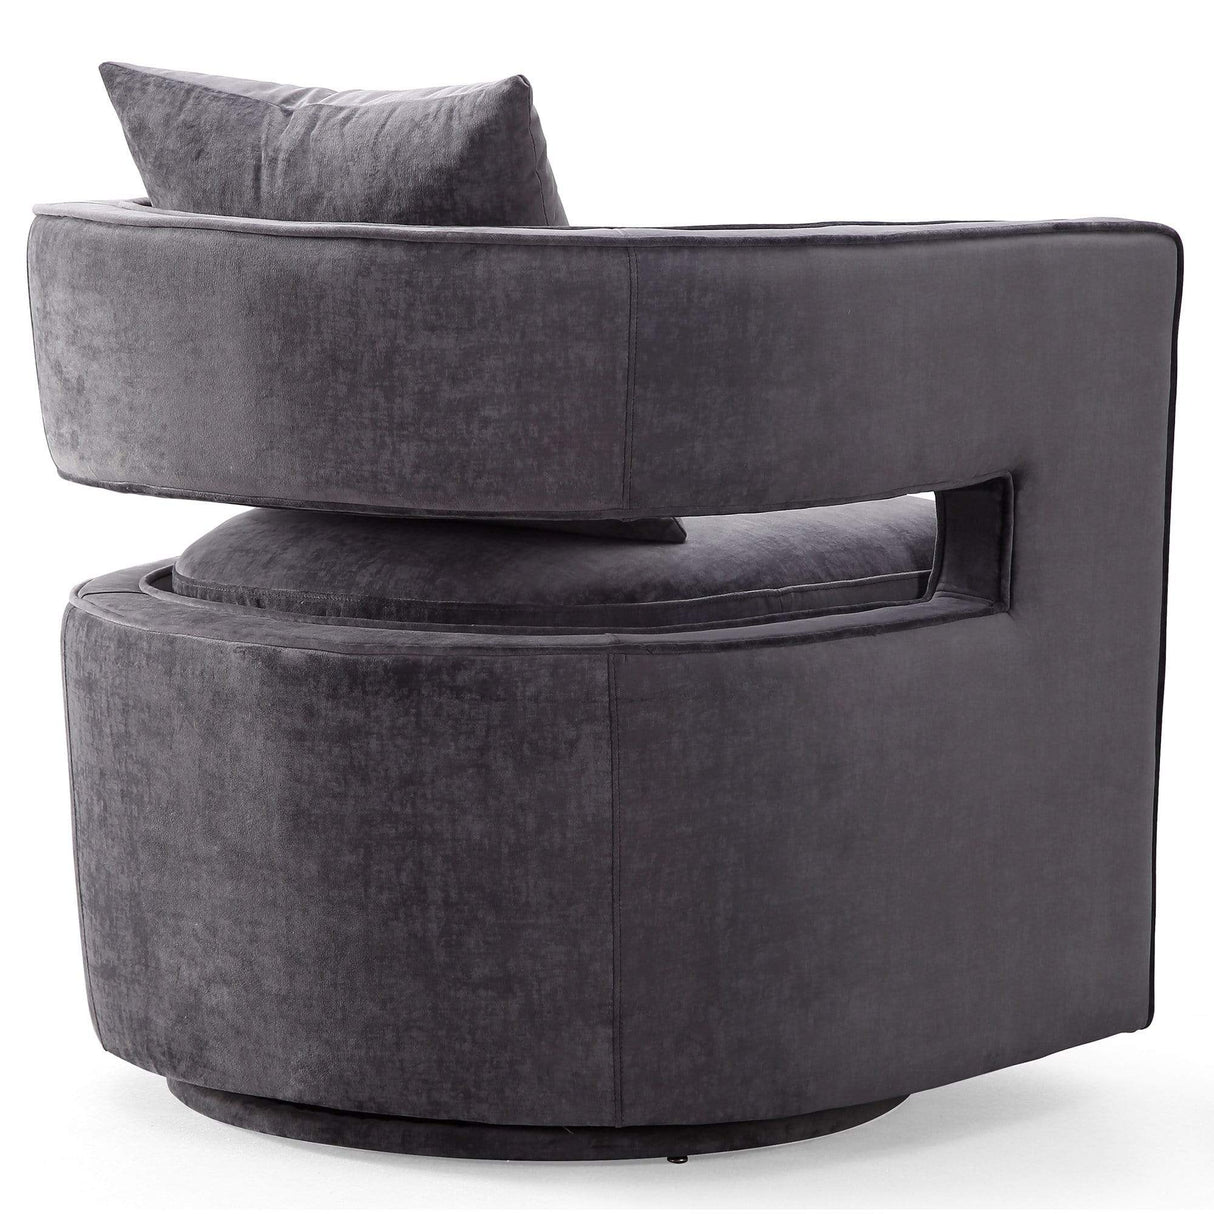 Candelabra Home Kennedy Swivel Chair Furniture